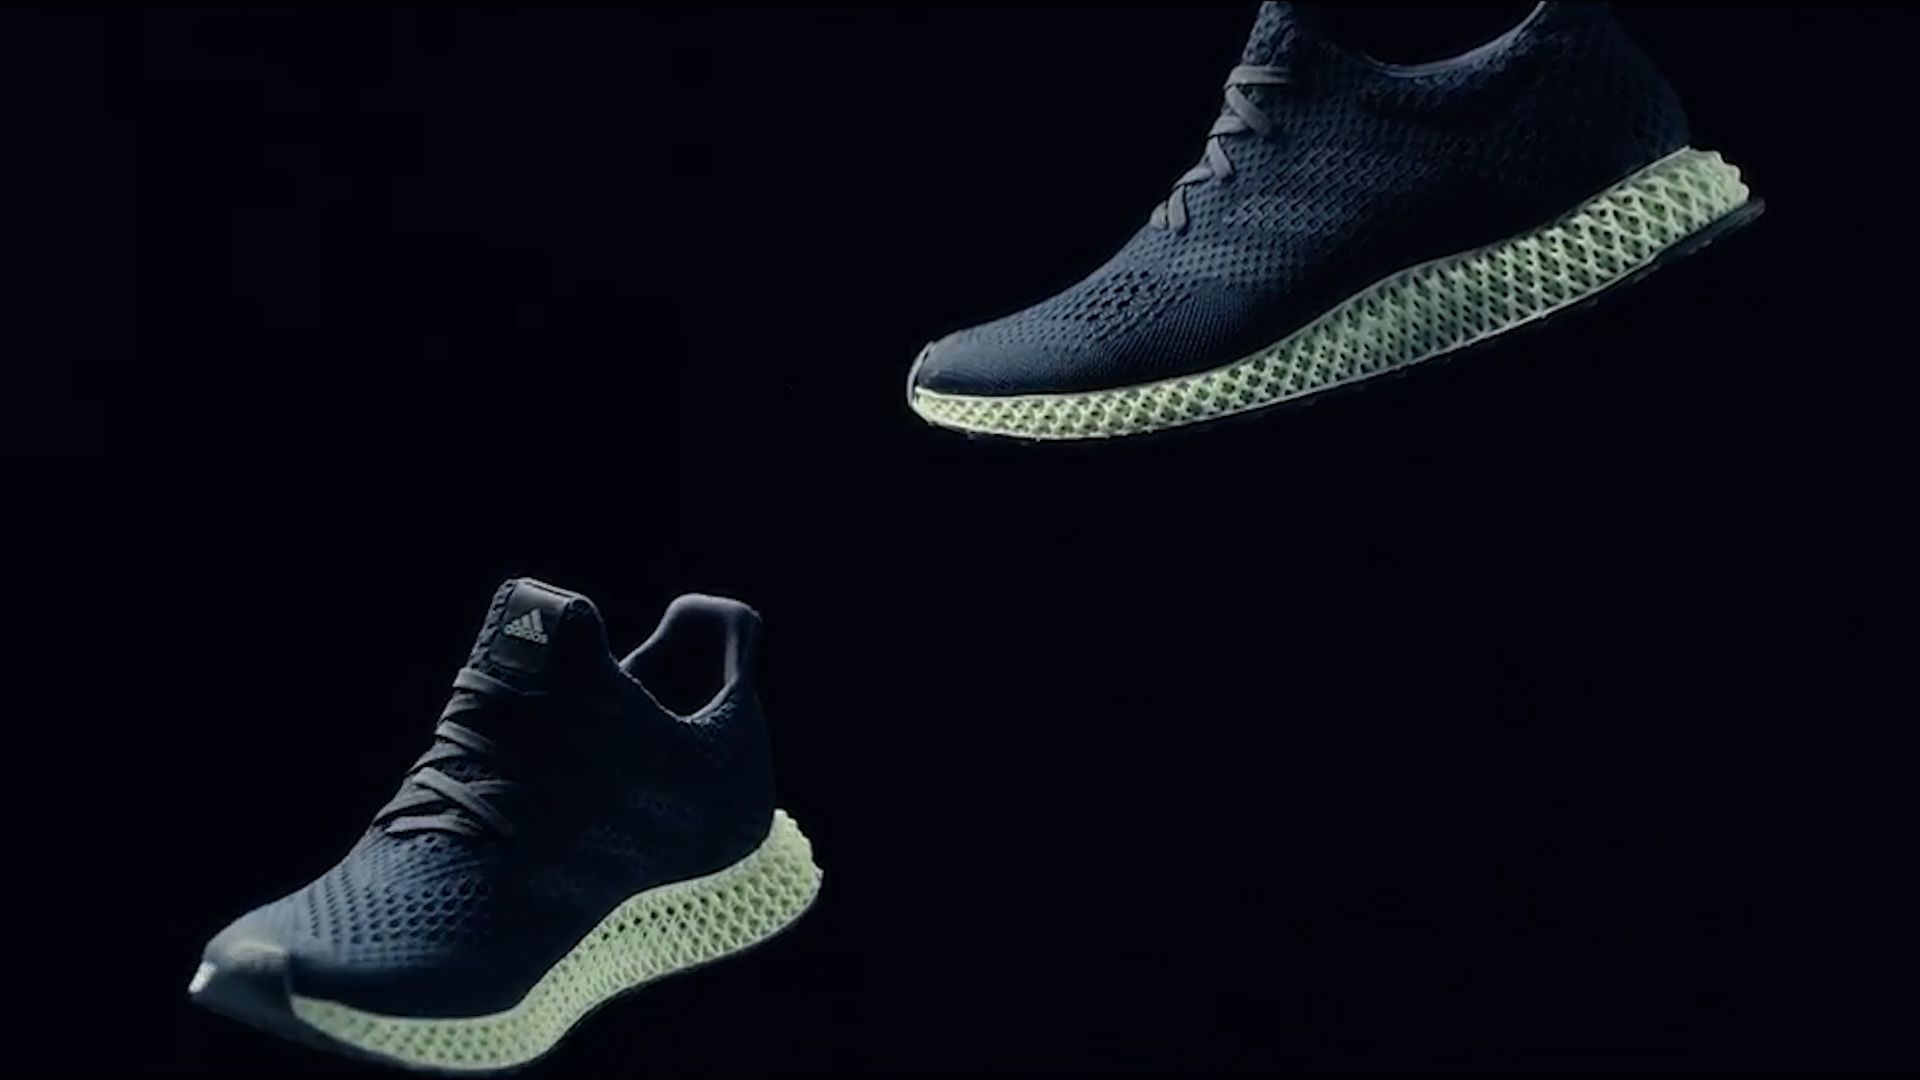 Tía George Bernard Siesta Adidas unveils new 3D printed sneaker | CNN Business